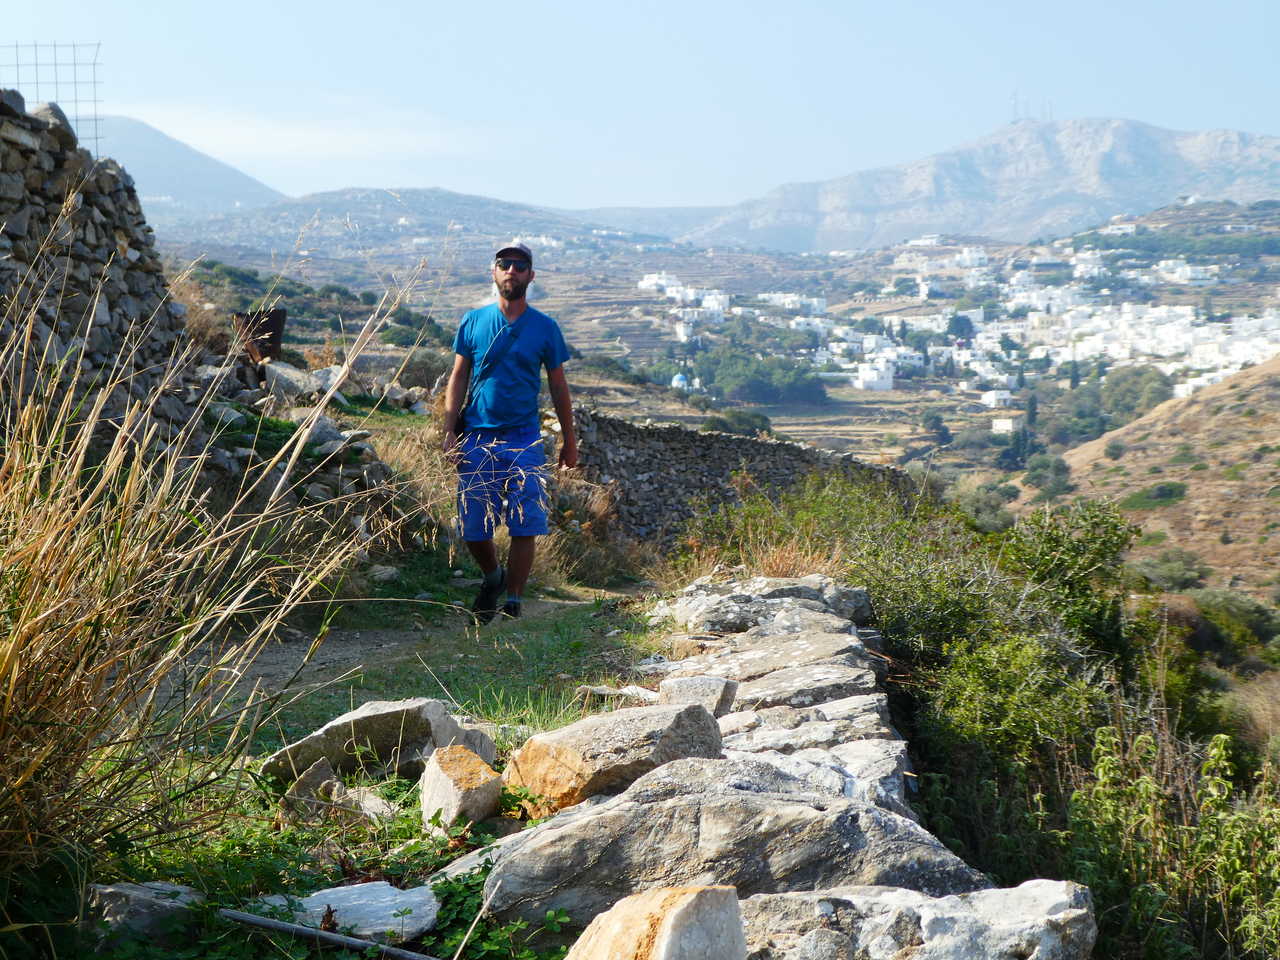 Image Paros, Naxos, Amorgos : trilogie des Cyclades